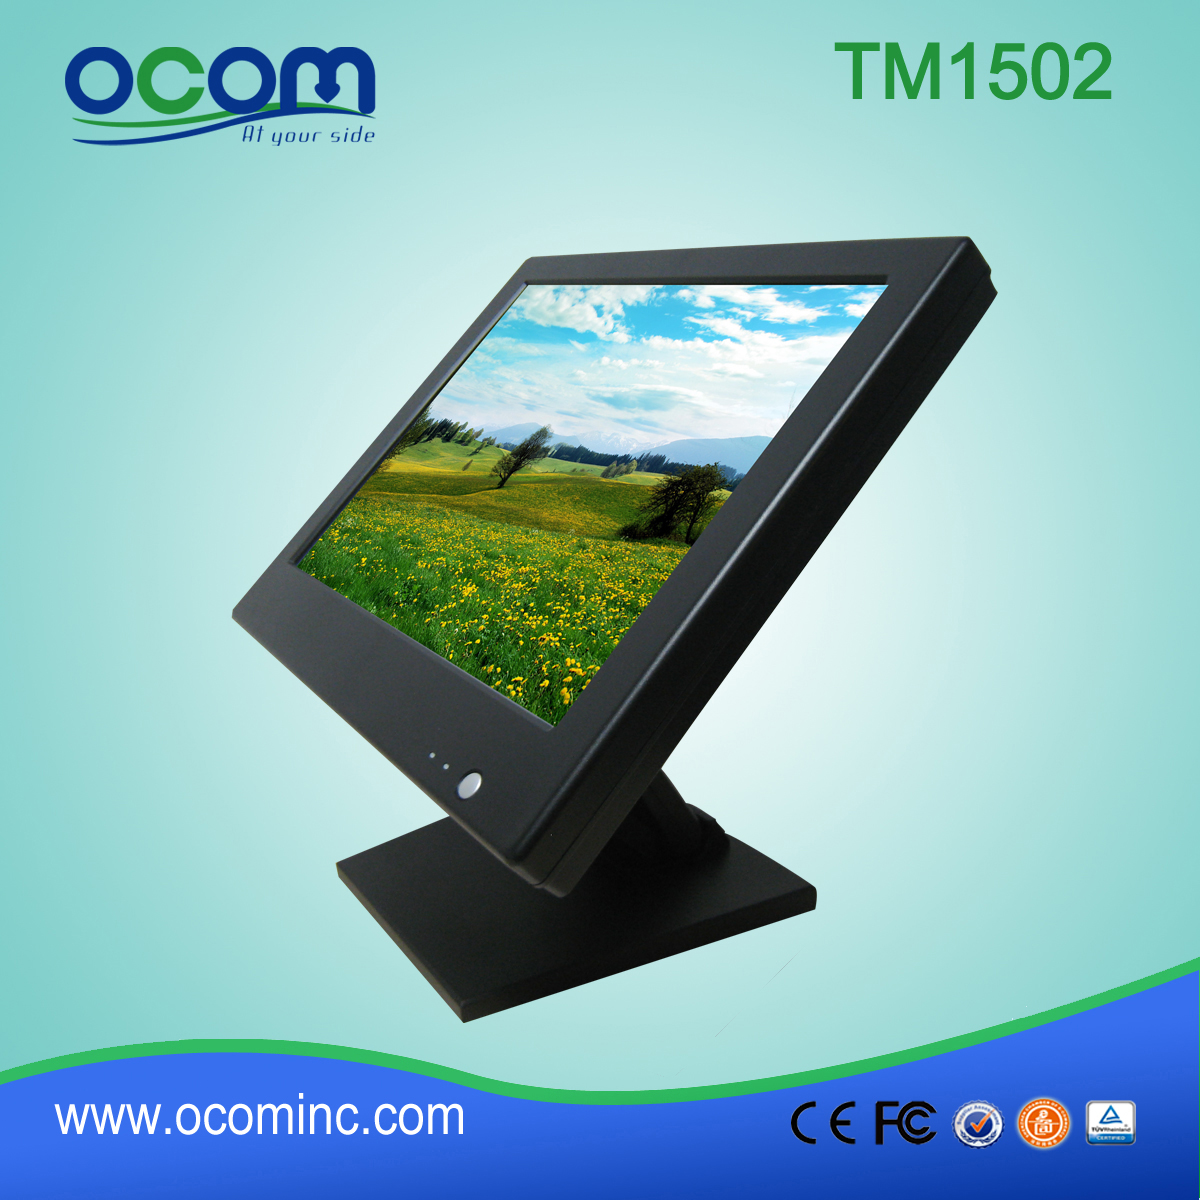 TM1502 Made In China LED Touch Monitor precio